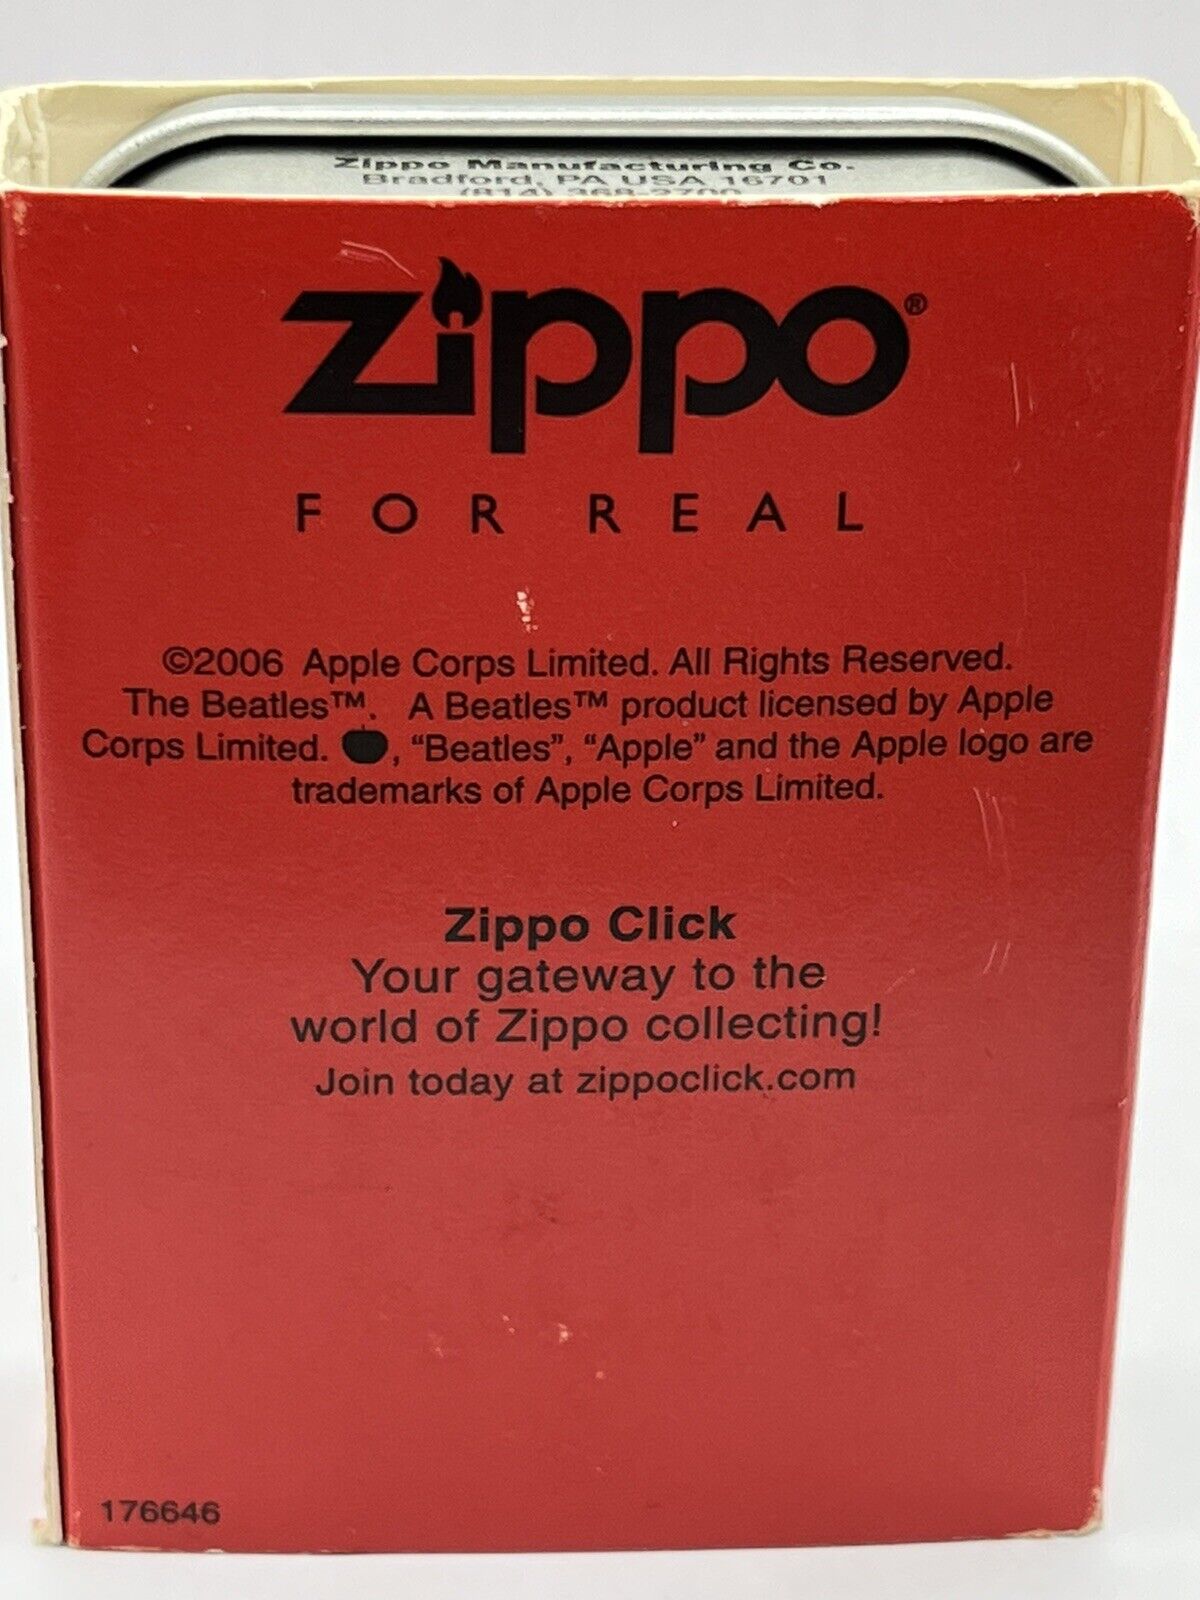 ZIPPO 2001 THE BEATLES HELP RARE NIAGARA FALLS CANADA SEALED IN TIN WITH SLEEVE